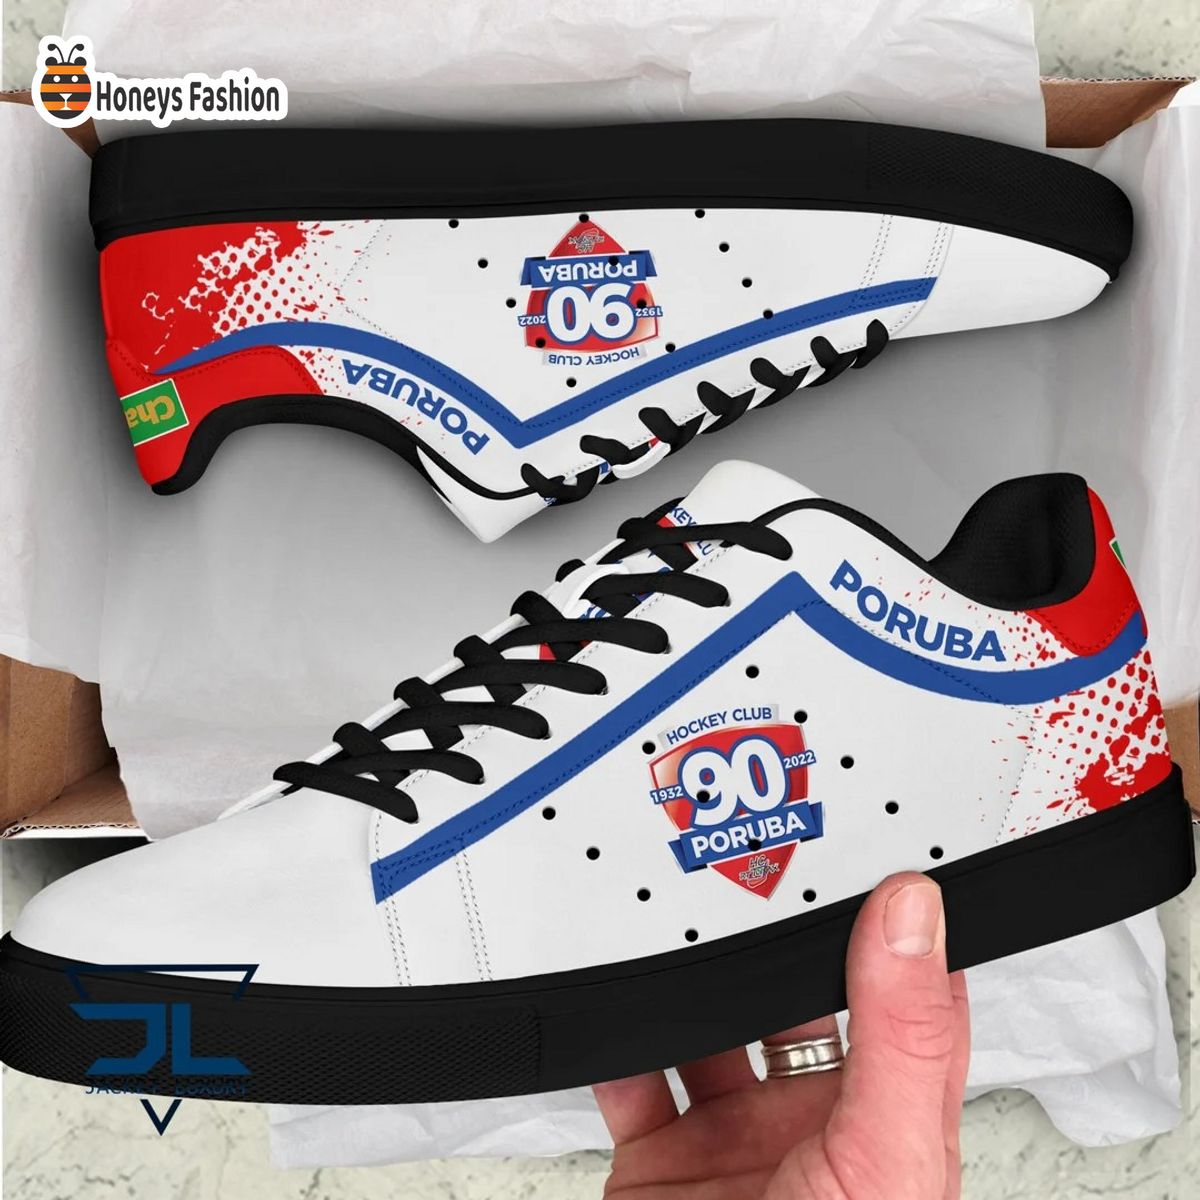 HC RT Torax Poruba stan smith skate shoes